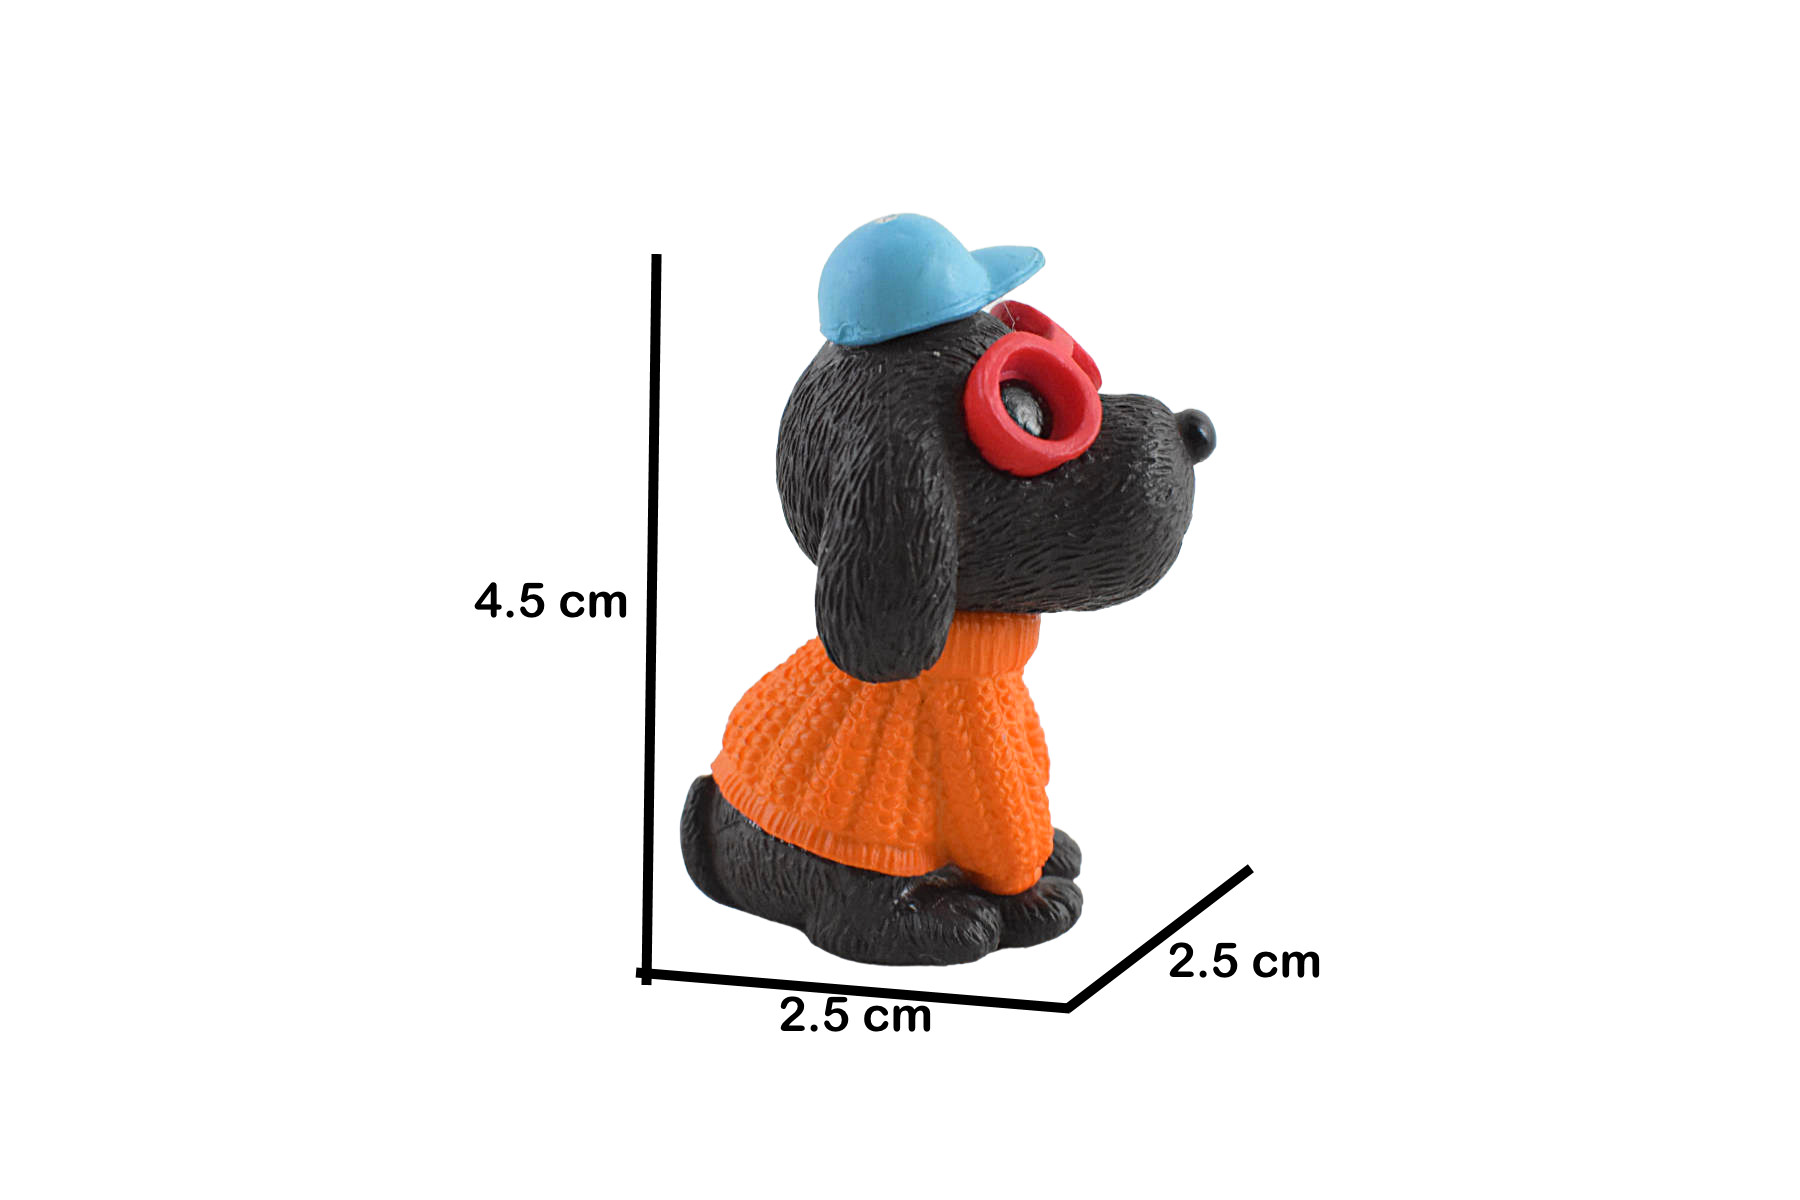 Miniature Dog wearing Cap for Garden Decor - Deczo